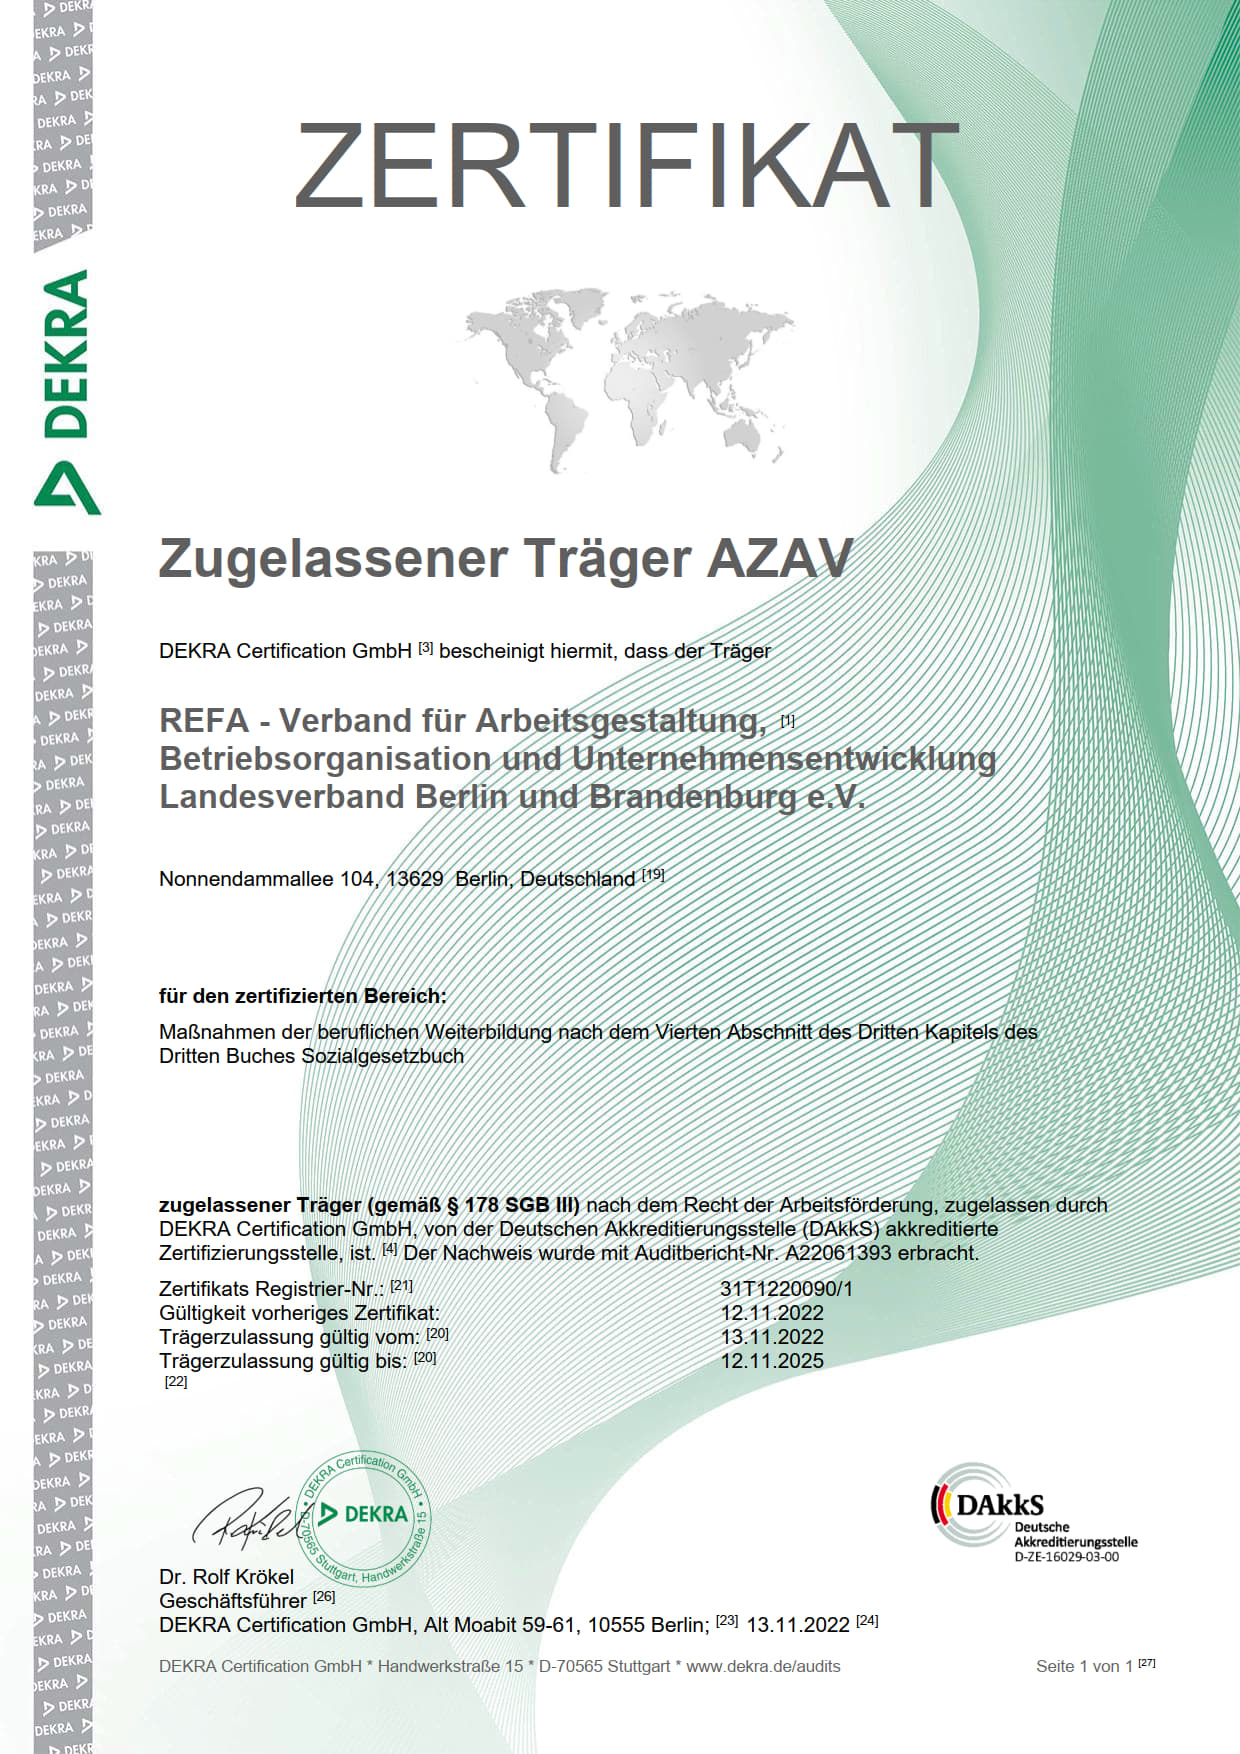 Zertifikat AZAV Träger web